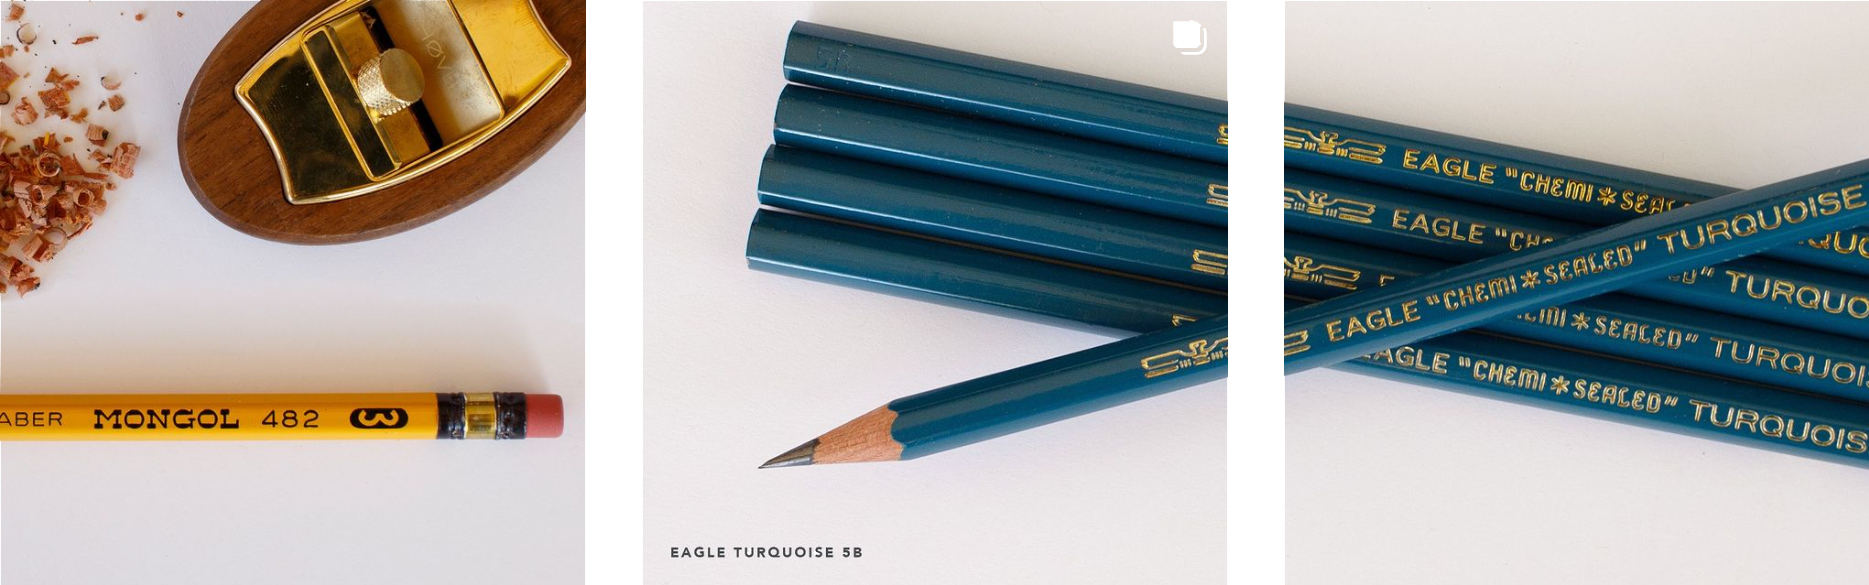 Brand Name Pencils on Instagram